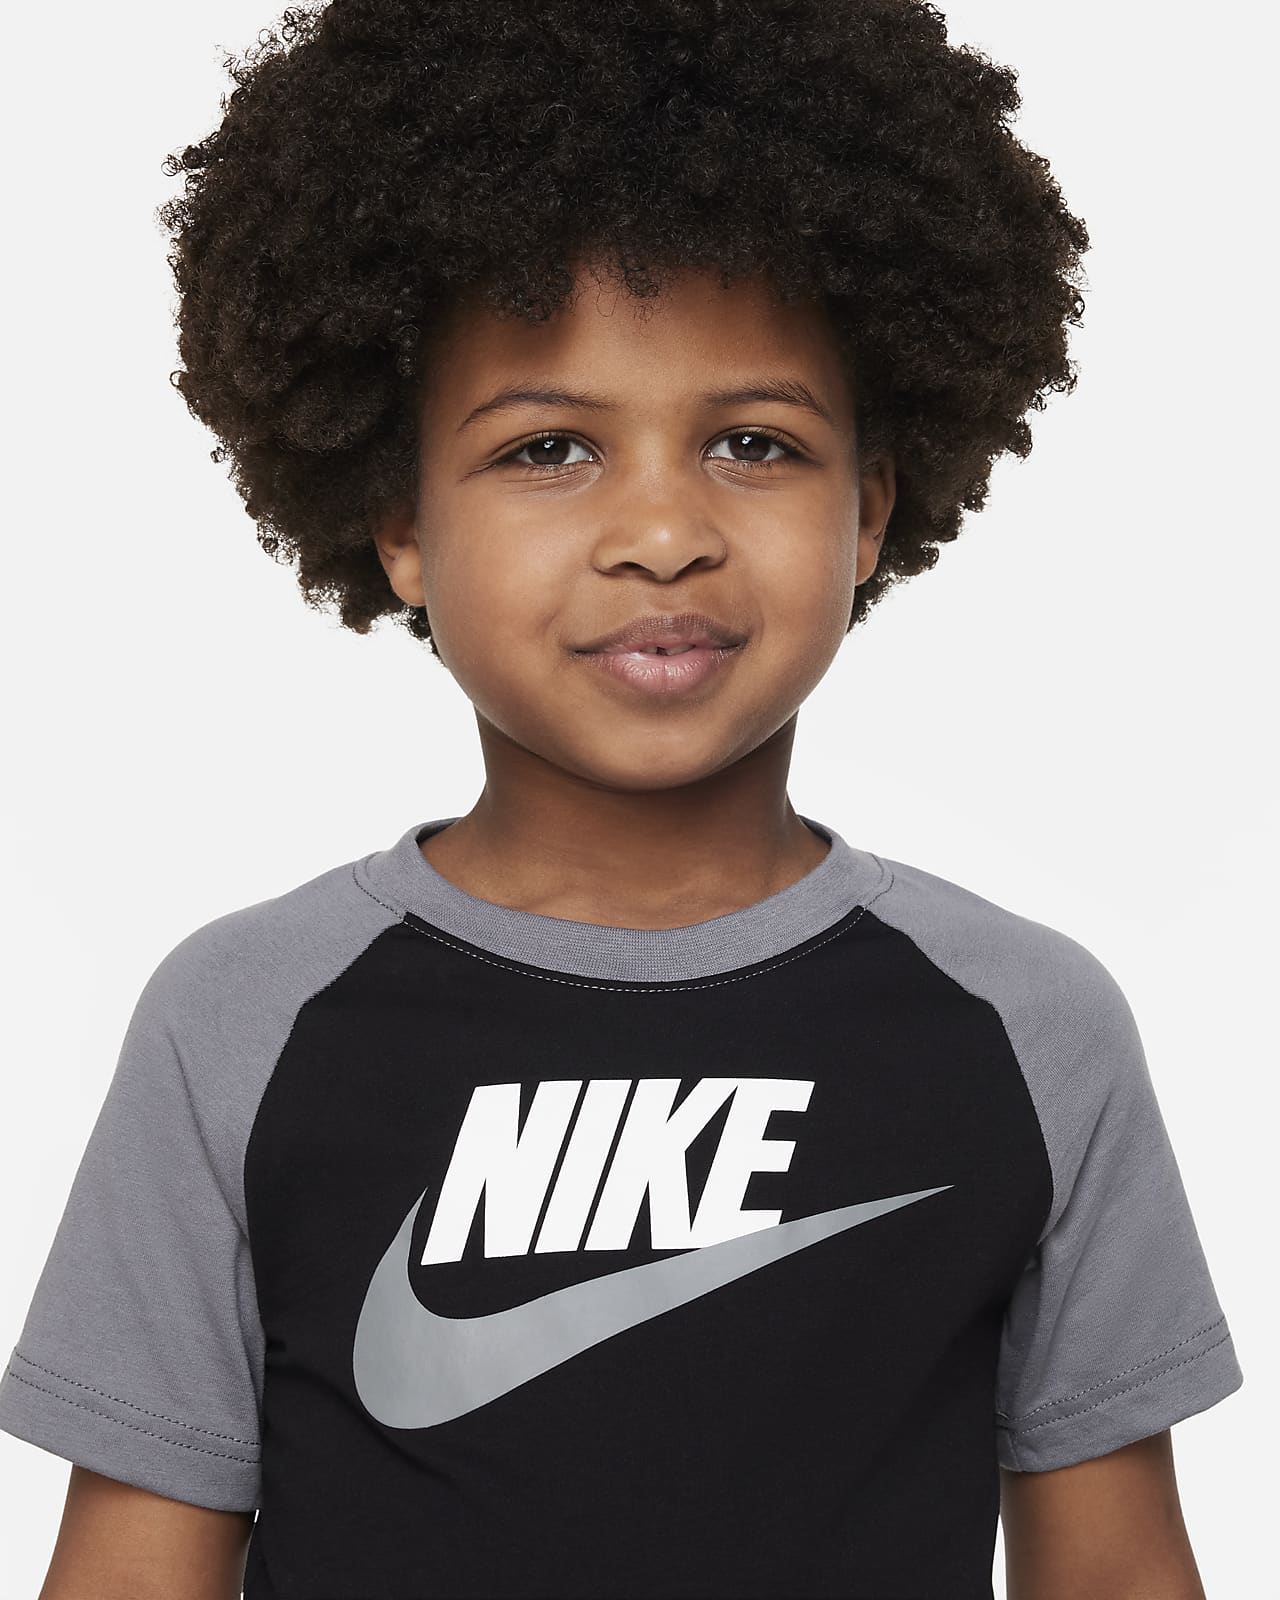 Raglan Little Kids\' Nike Futura Sportswear T-Shirt. Tee